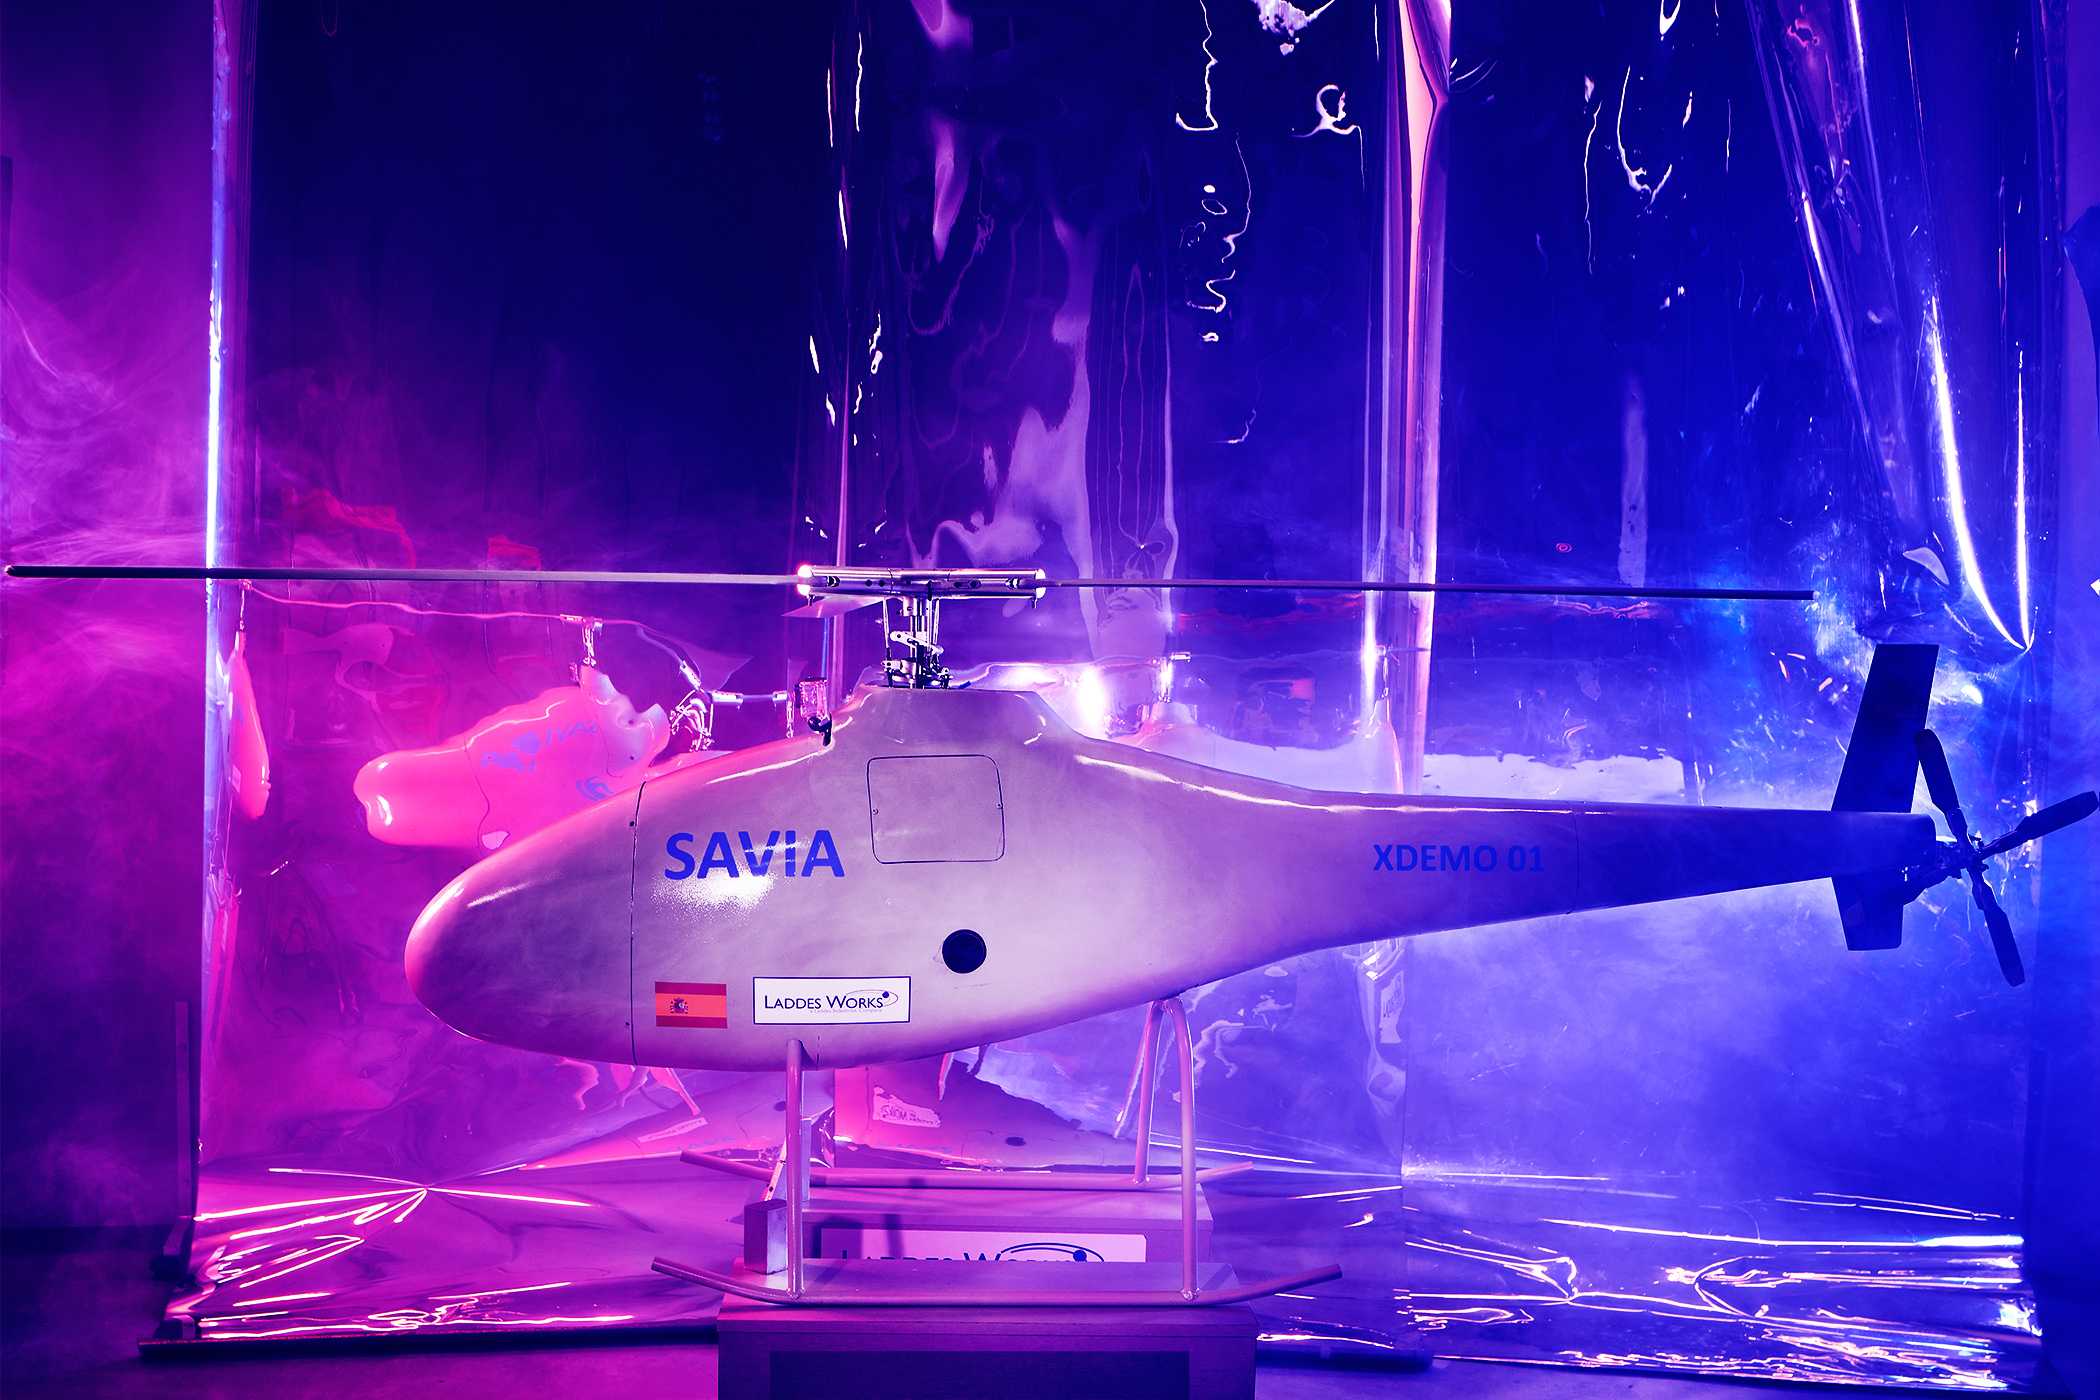 Drone SAVIA  Laddes Works brand image by Lena Repetskaya